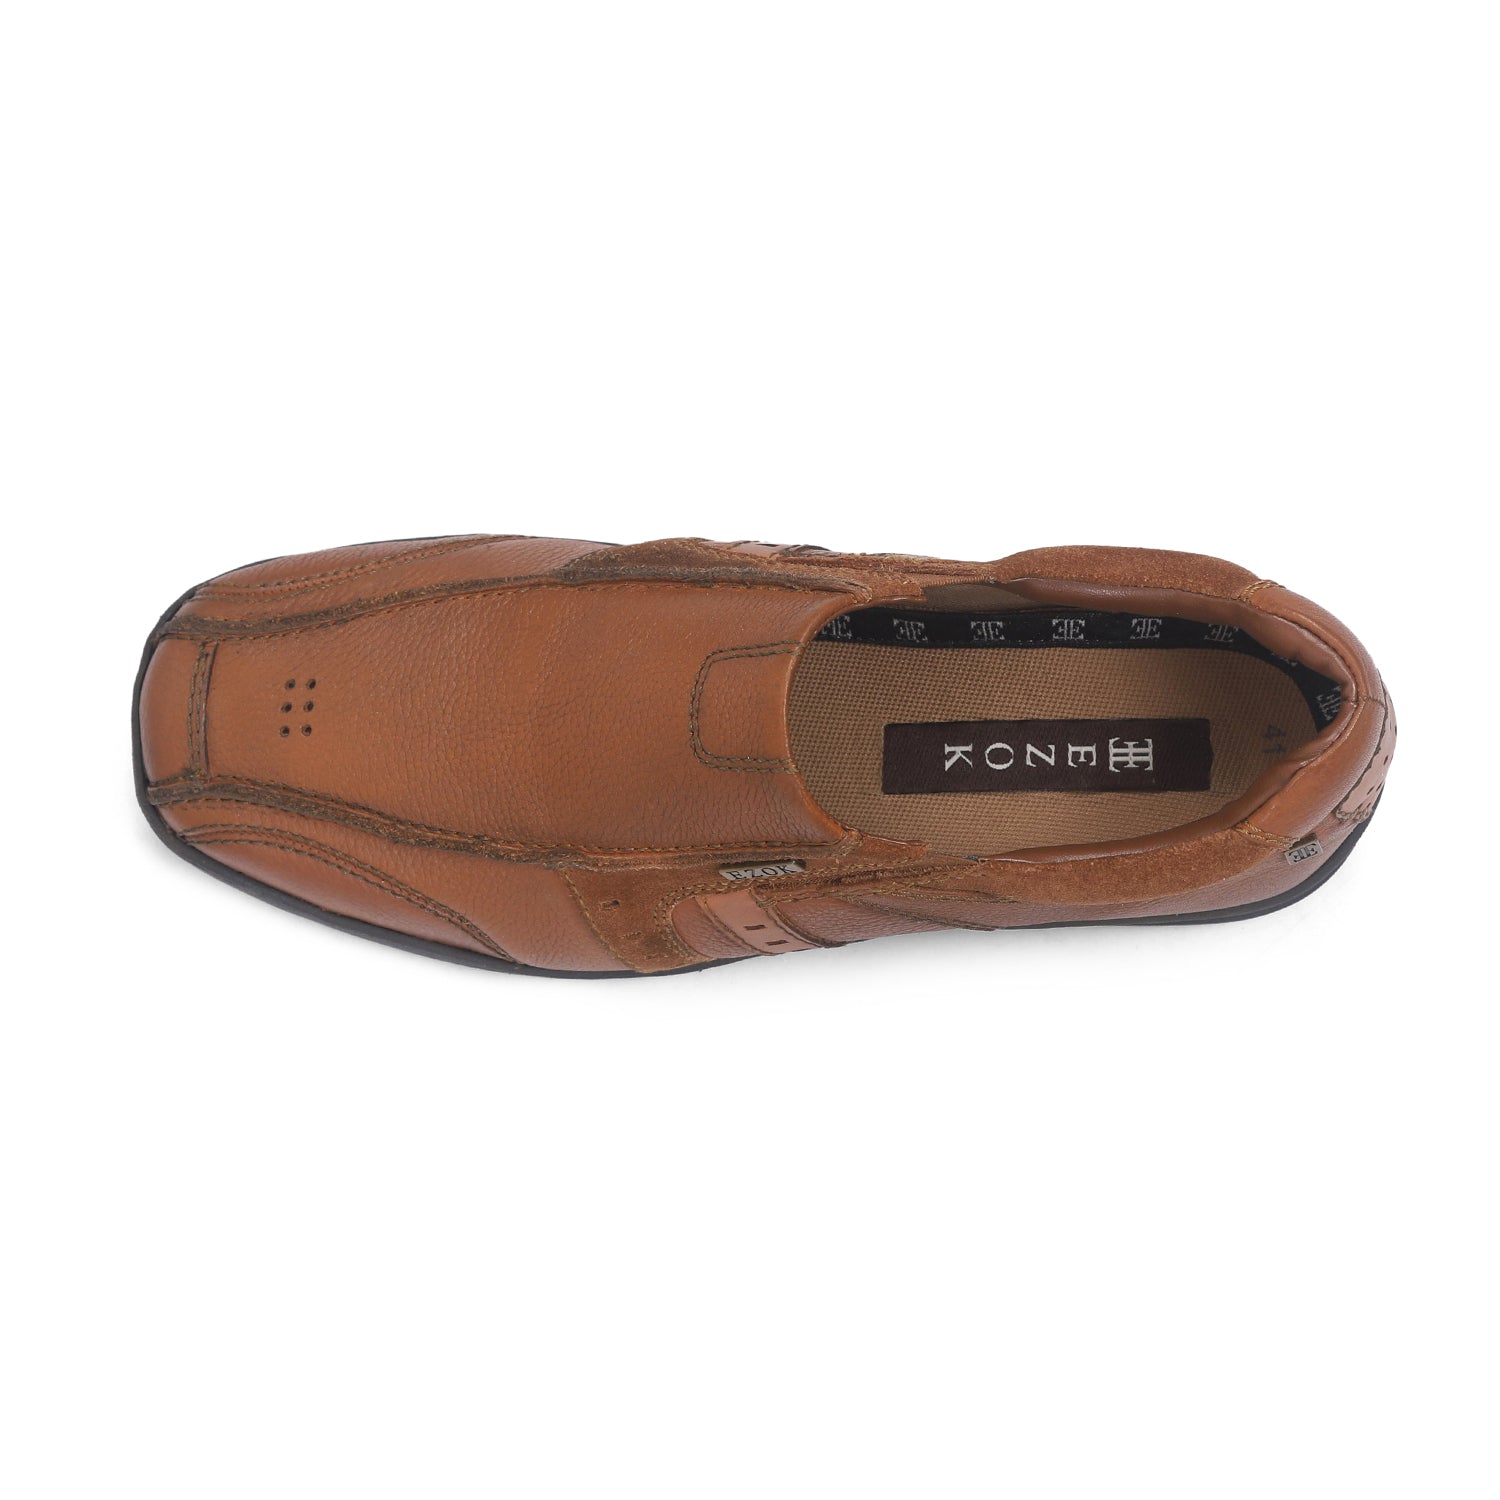 Ezok Men Tan Genuine Leather Slip-Ons Shoes